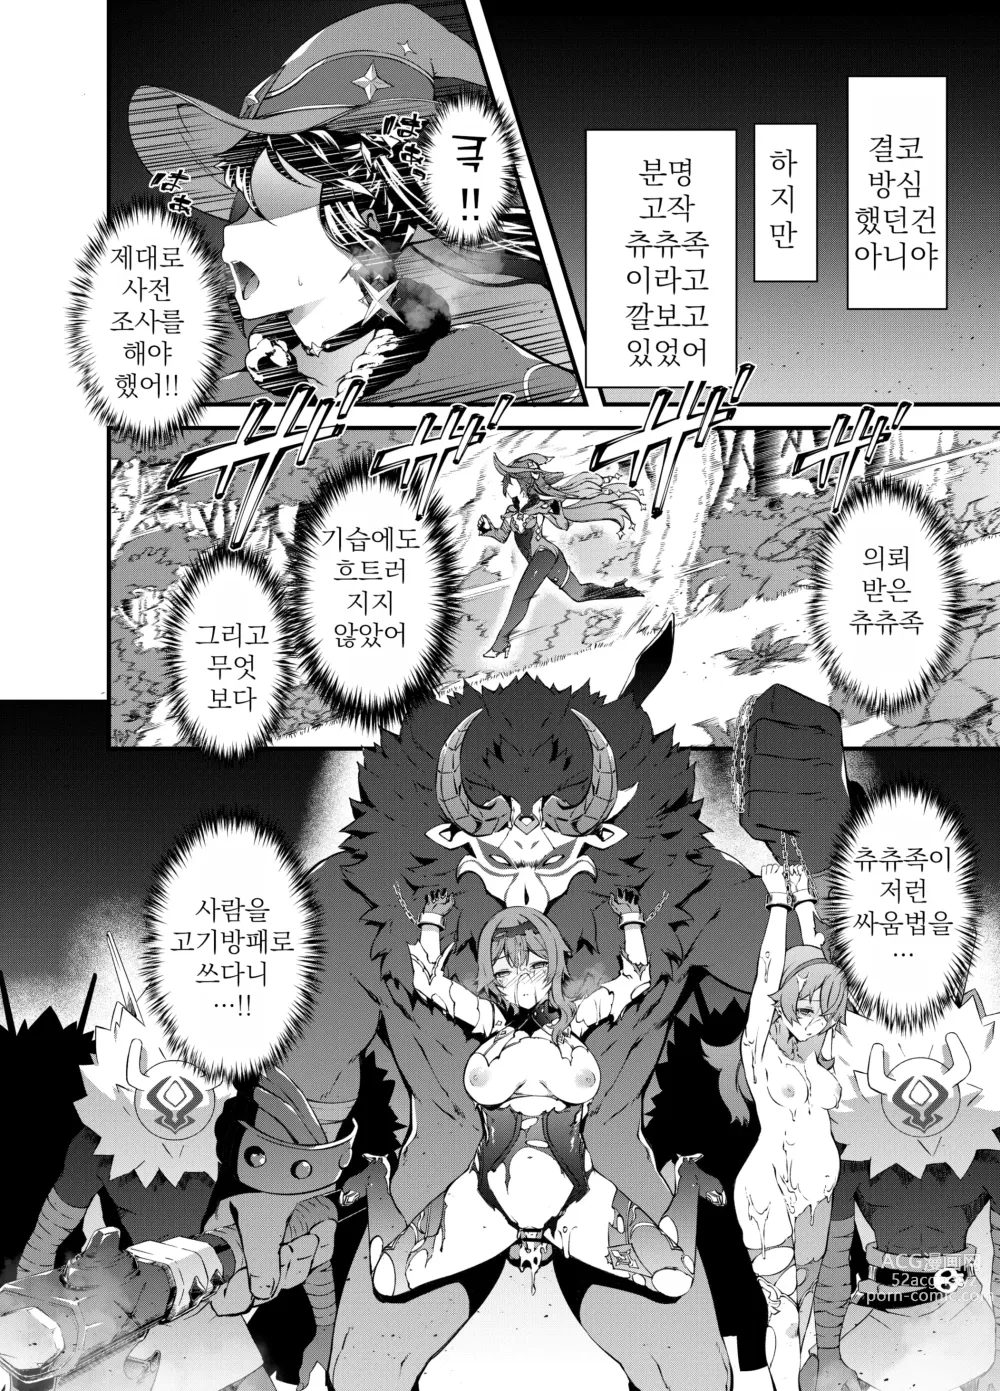 Page 4 of doujinshi 별이 떨어진 날